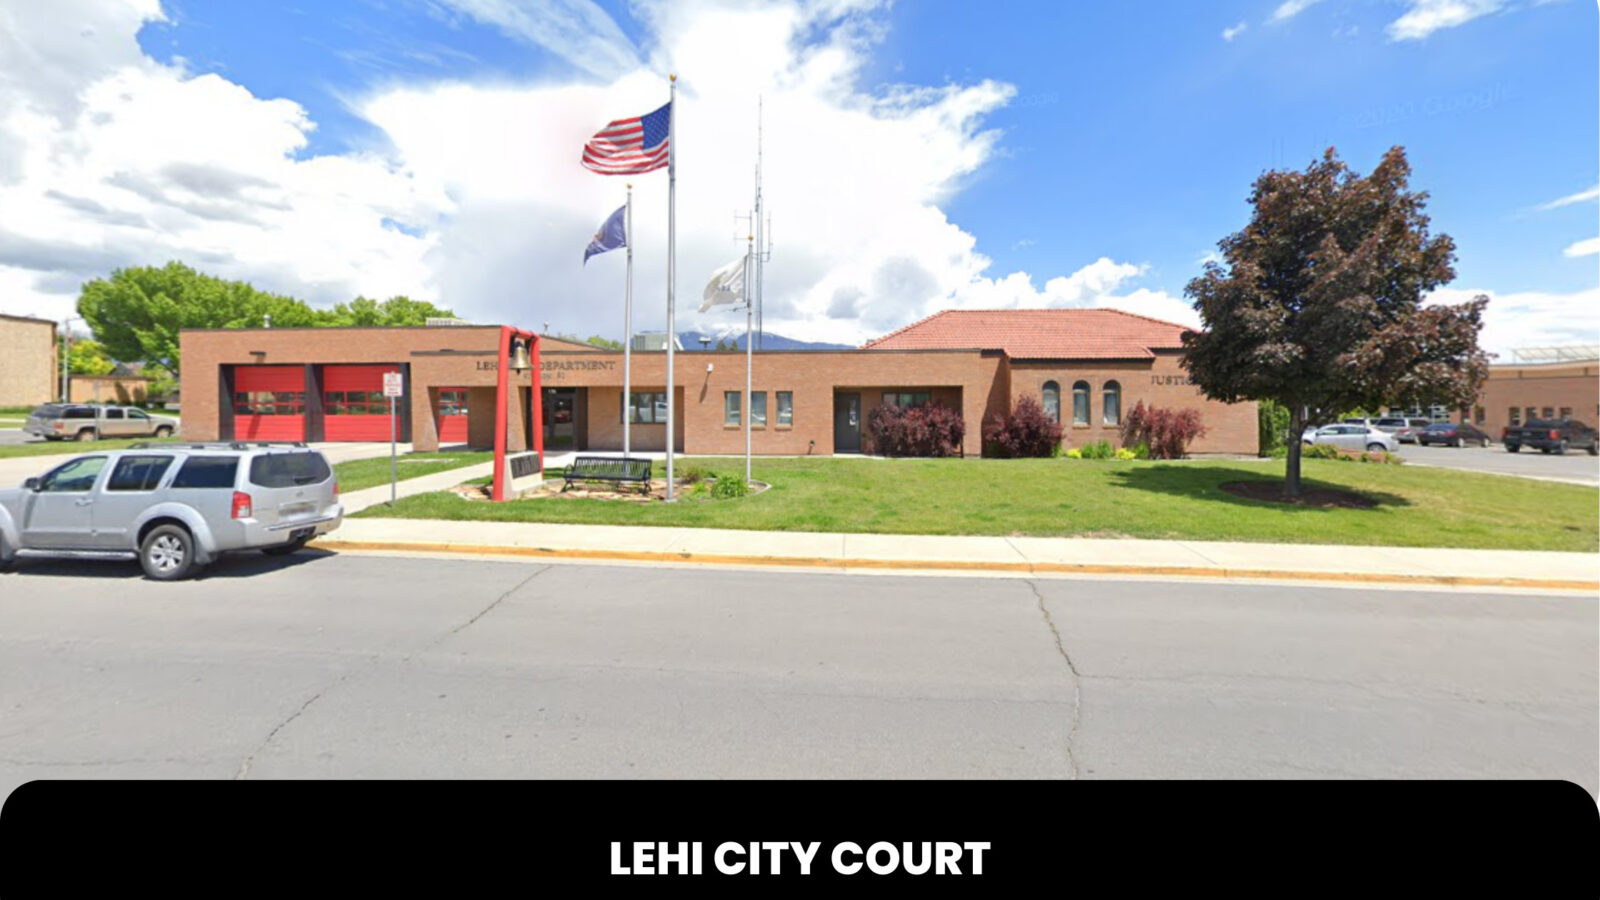 Lehi City Court